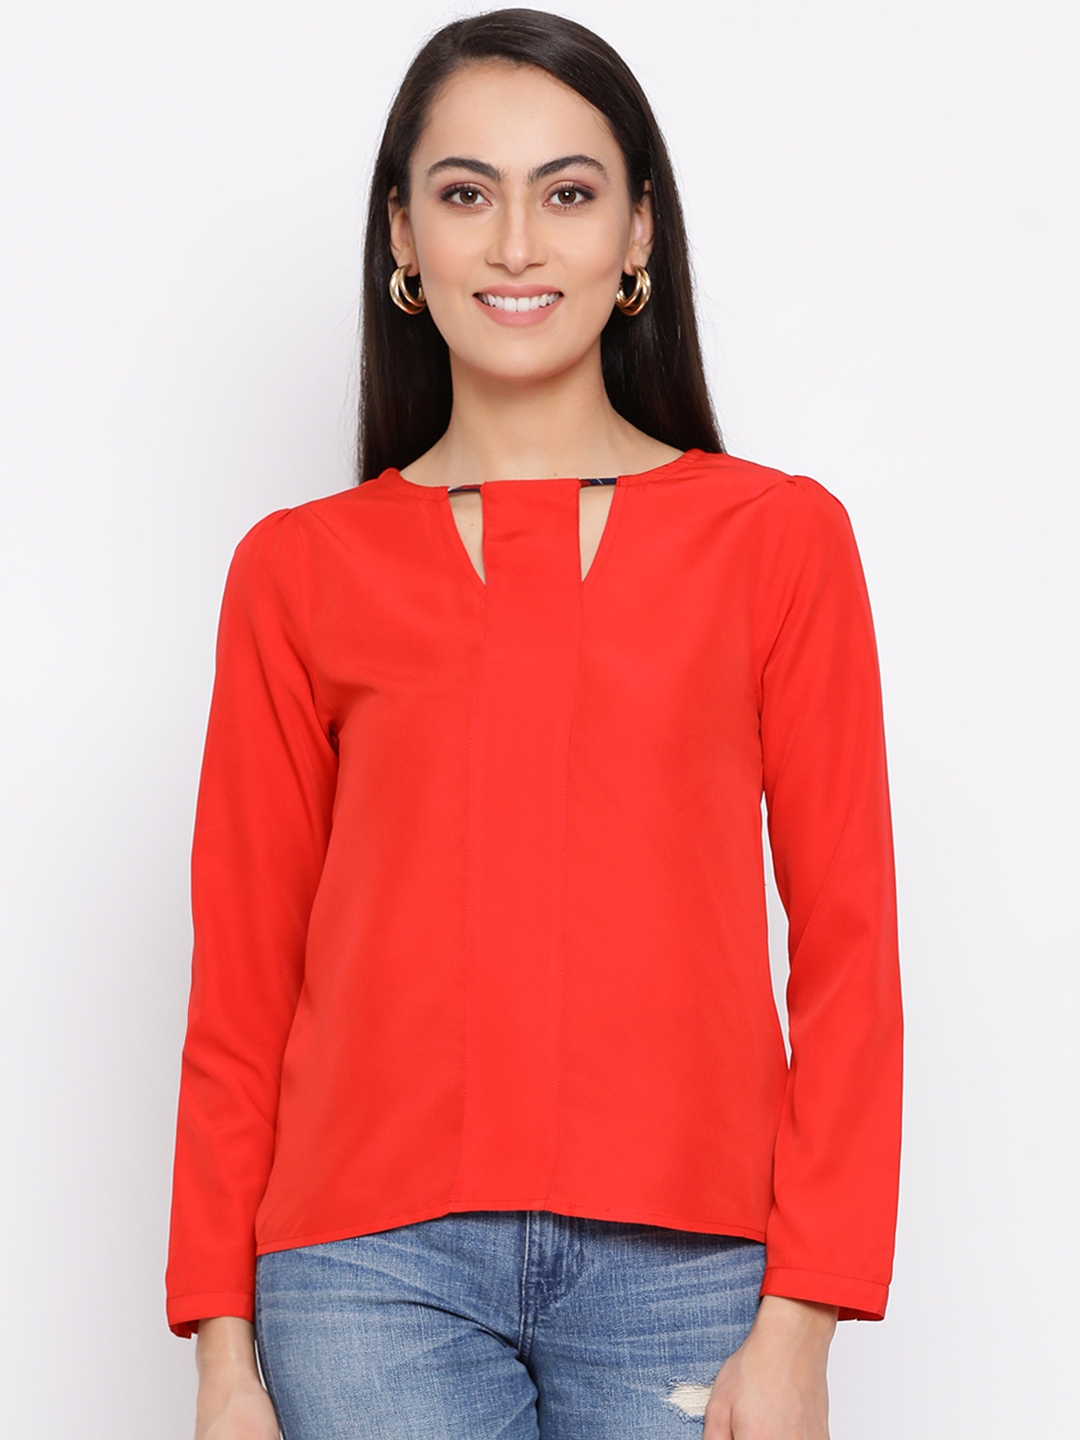 DRAAX fashions | Draax Fashions Women Red Solid Top